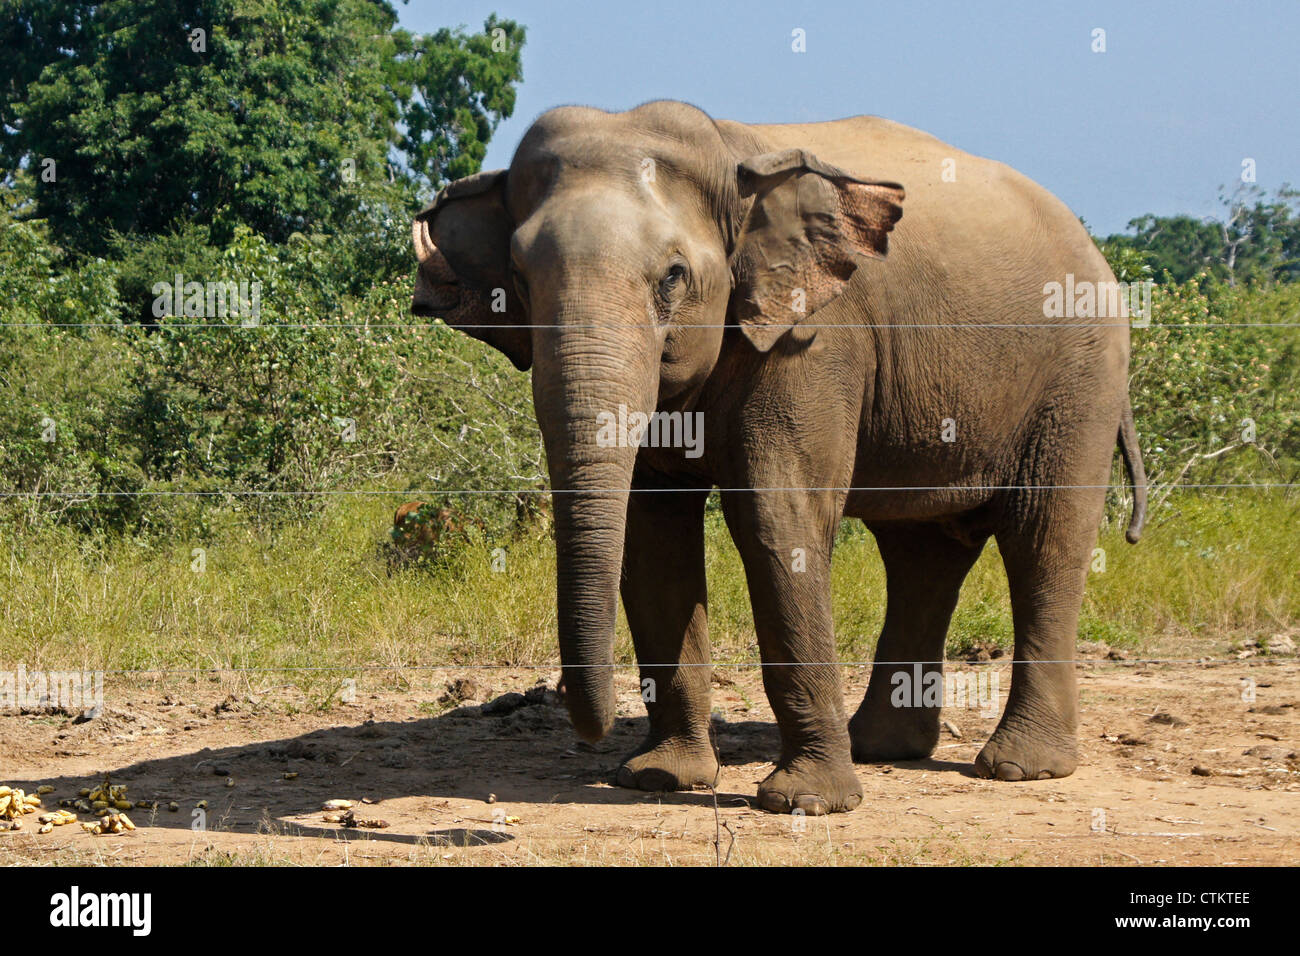 Asian elephant standing by electric fence, Uda Walawe National Park, Sri Lanka Stock Photo